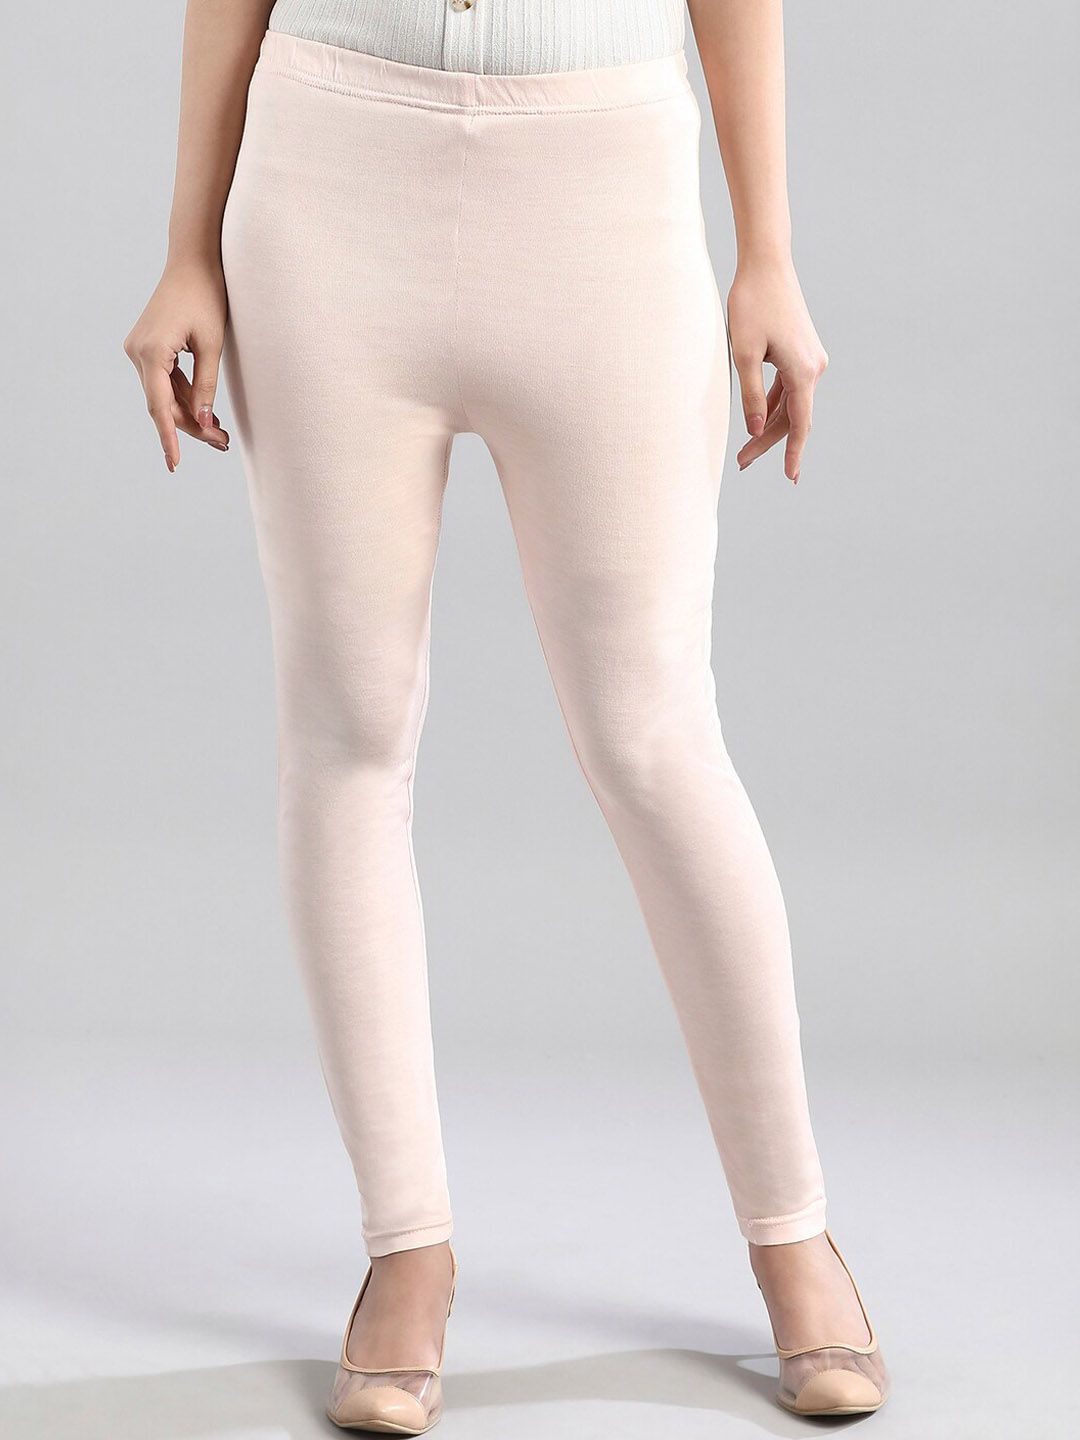 Aurelia Bottom : Buy Aurelia Grey Solid Pant Online | Nykaa Fashion.